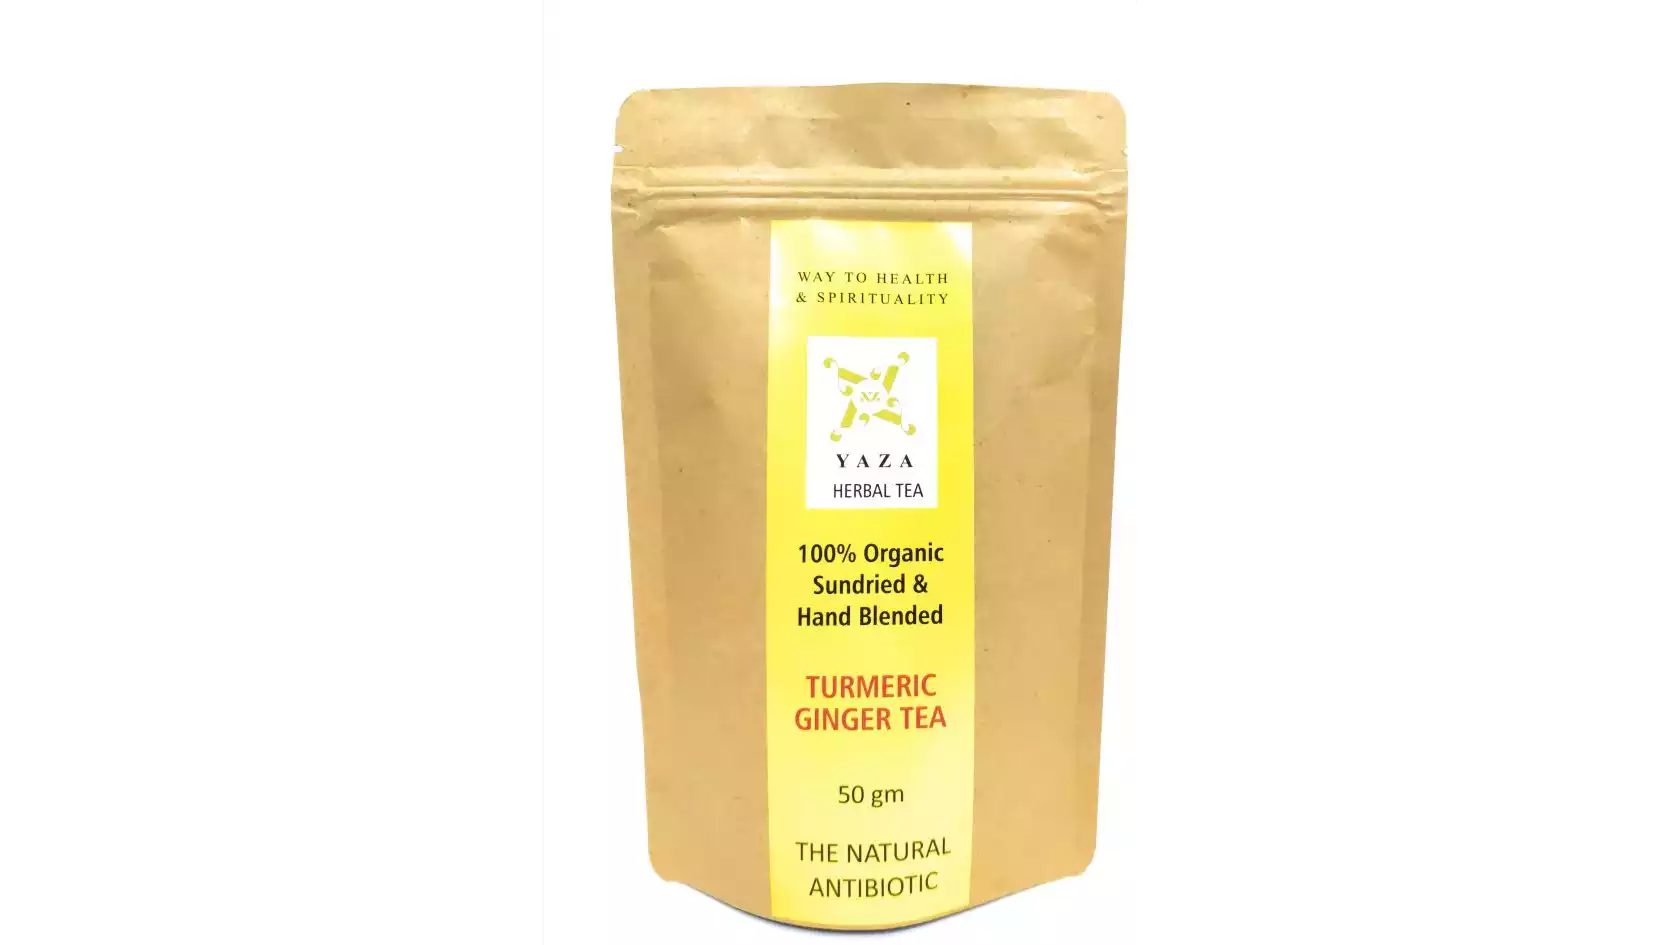 Yaza Turmeric Ginger Tea (50g)